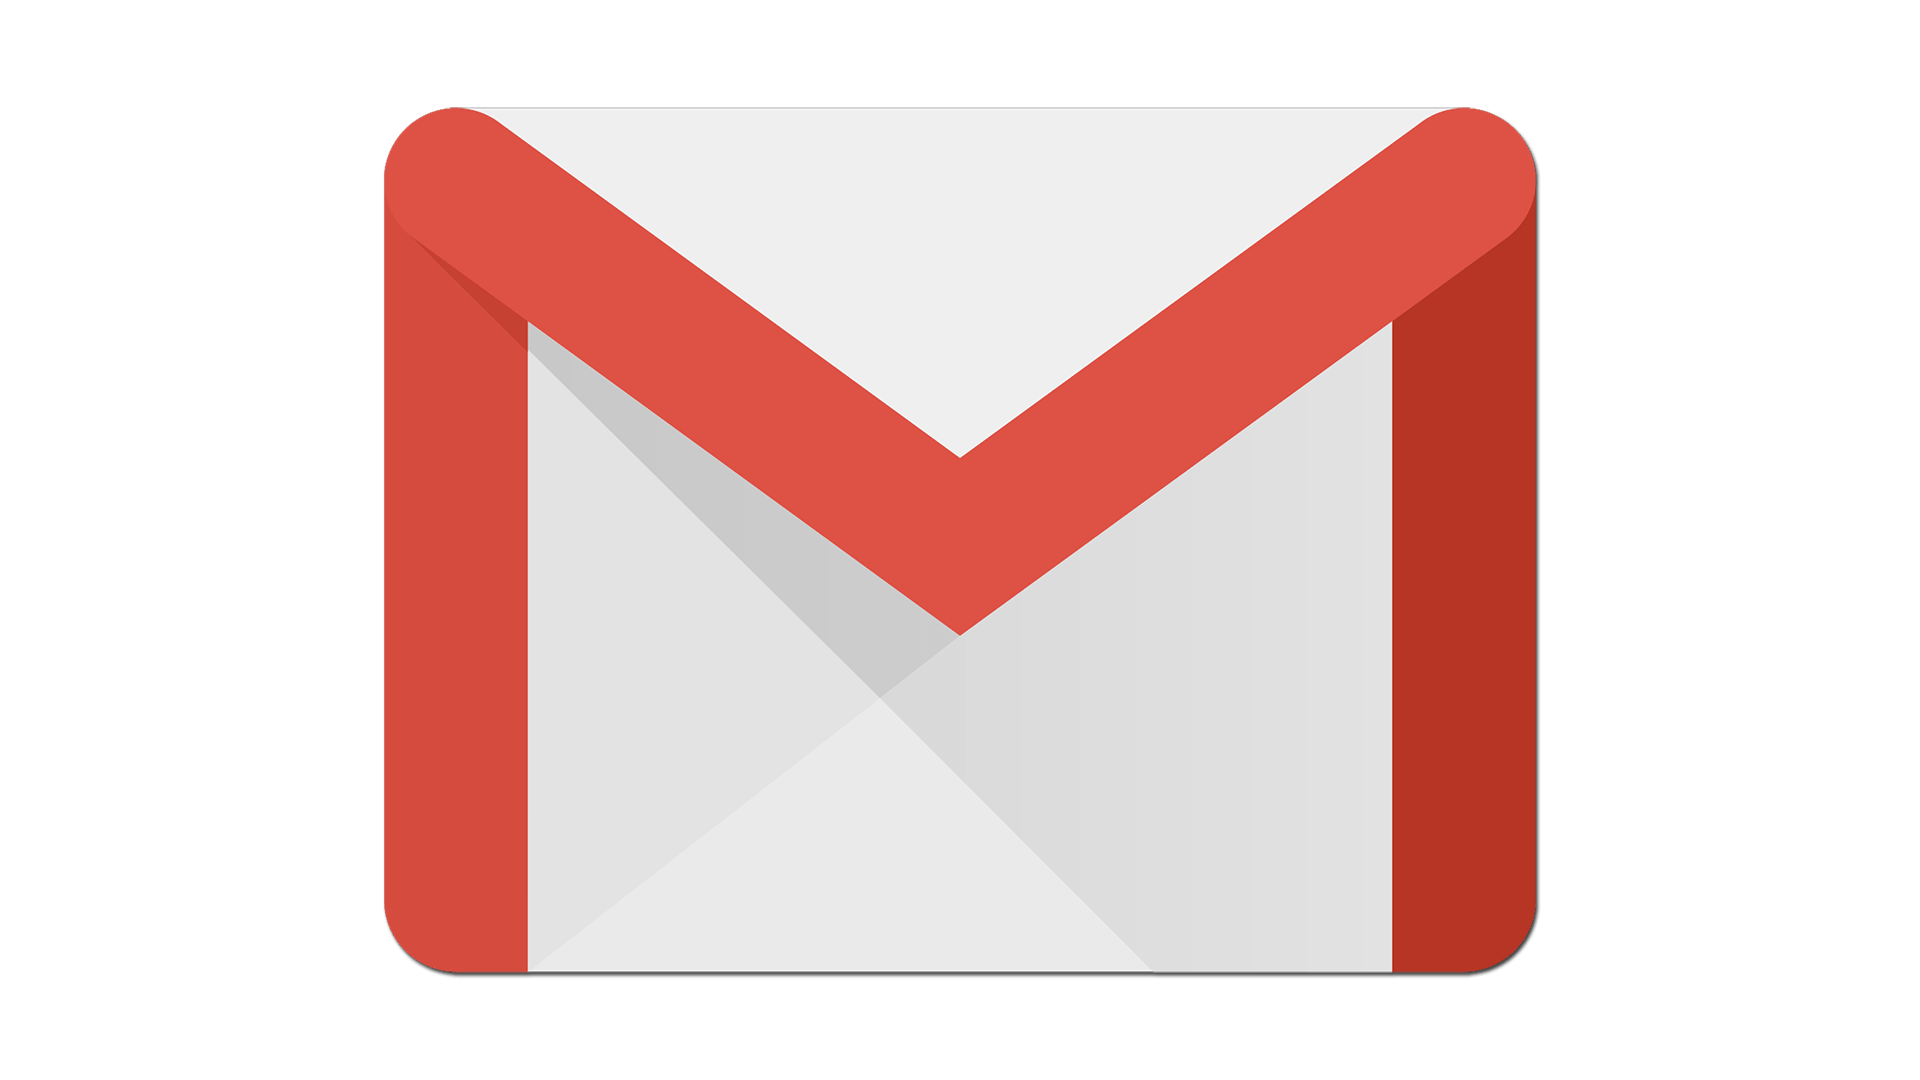 K gmail com. Gmail картинка. Гугл почта. Гугл почта картинки.